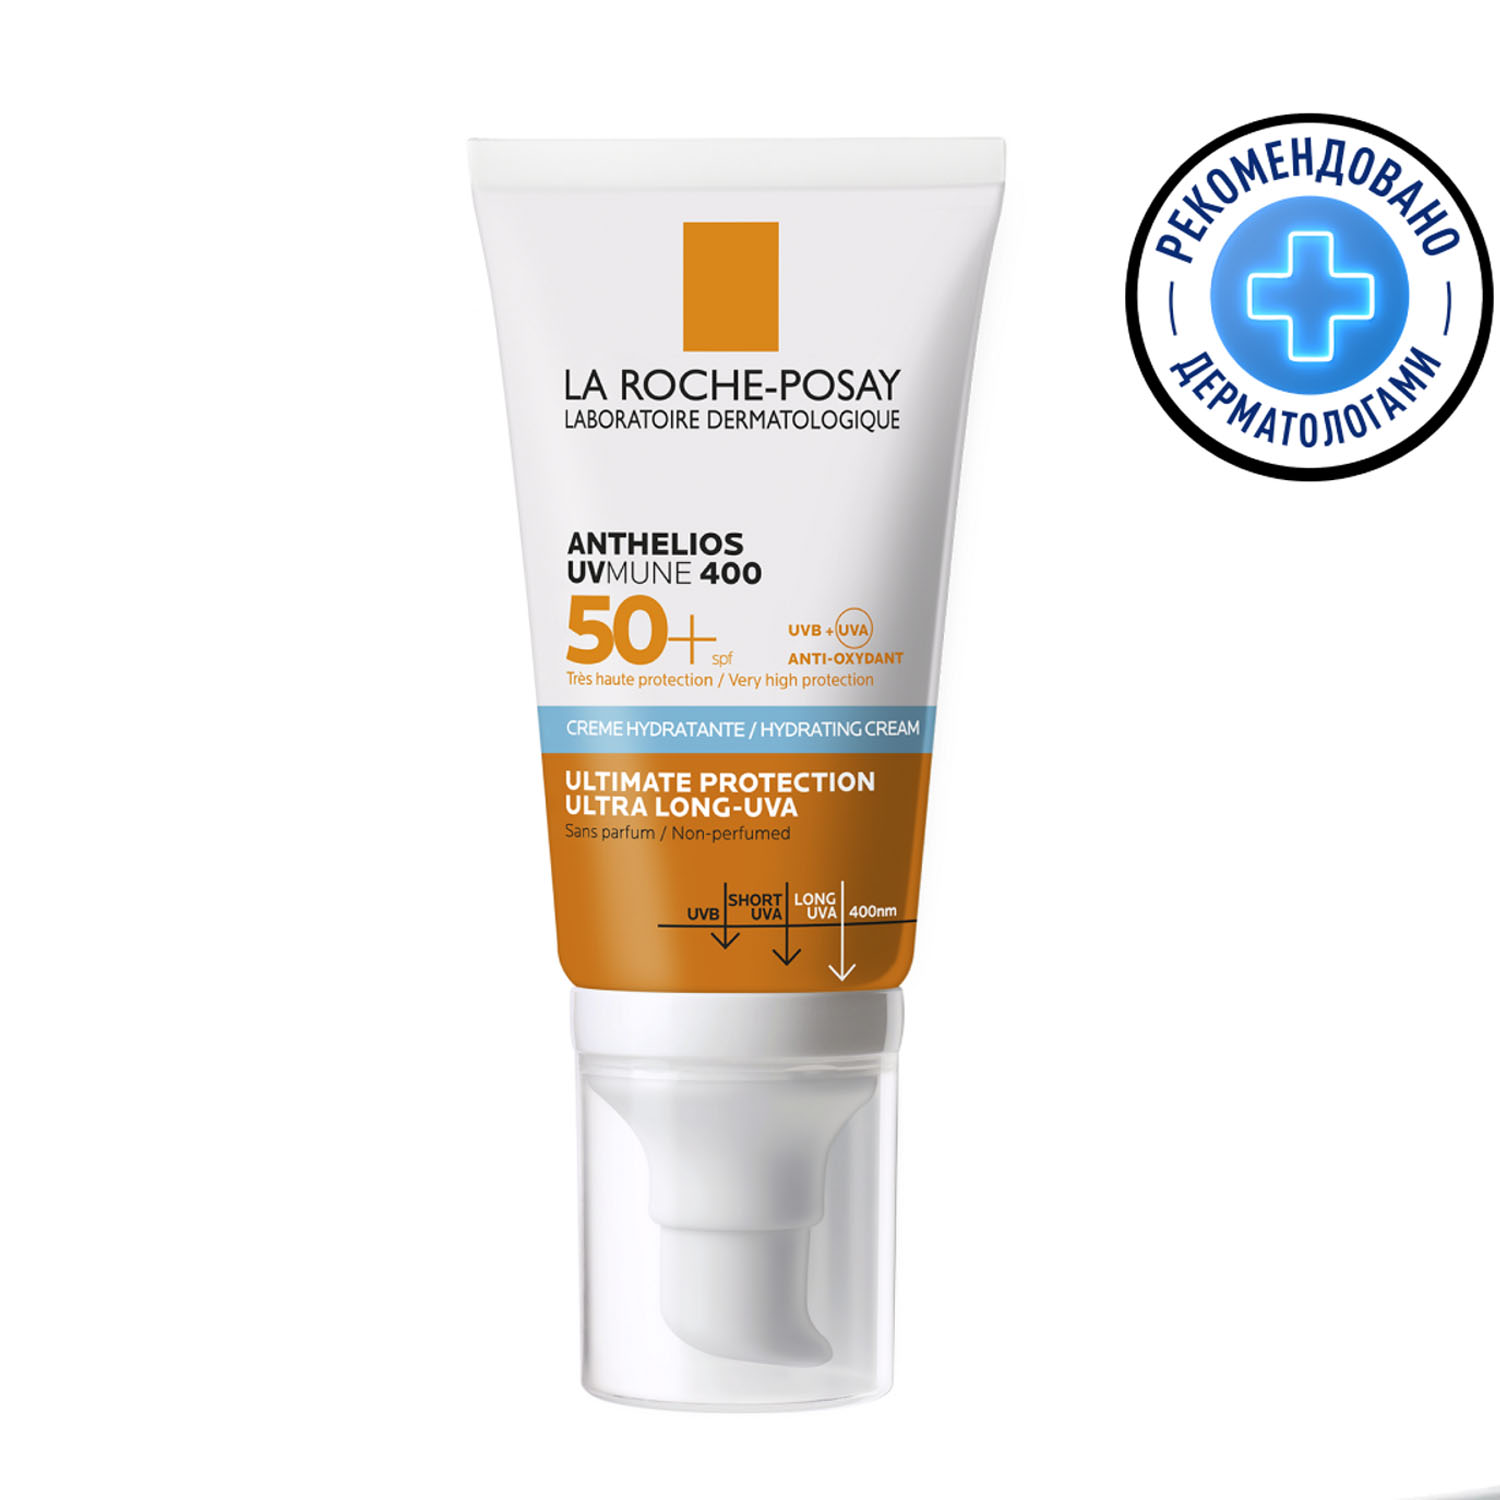 La Roche-Posay Солнцезащитный увлажняющий крем для лица SPF50  PPD 30, 50 мл. фото